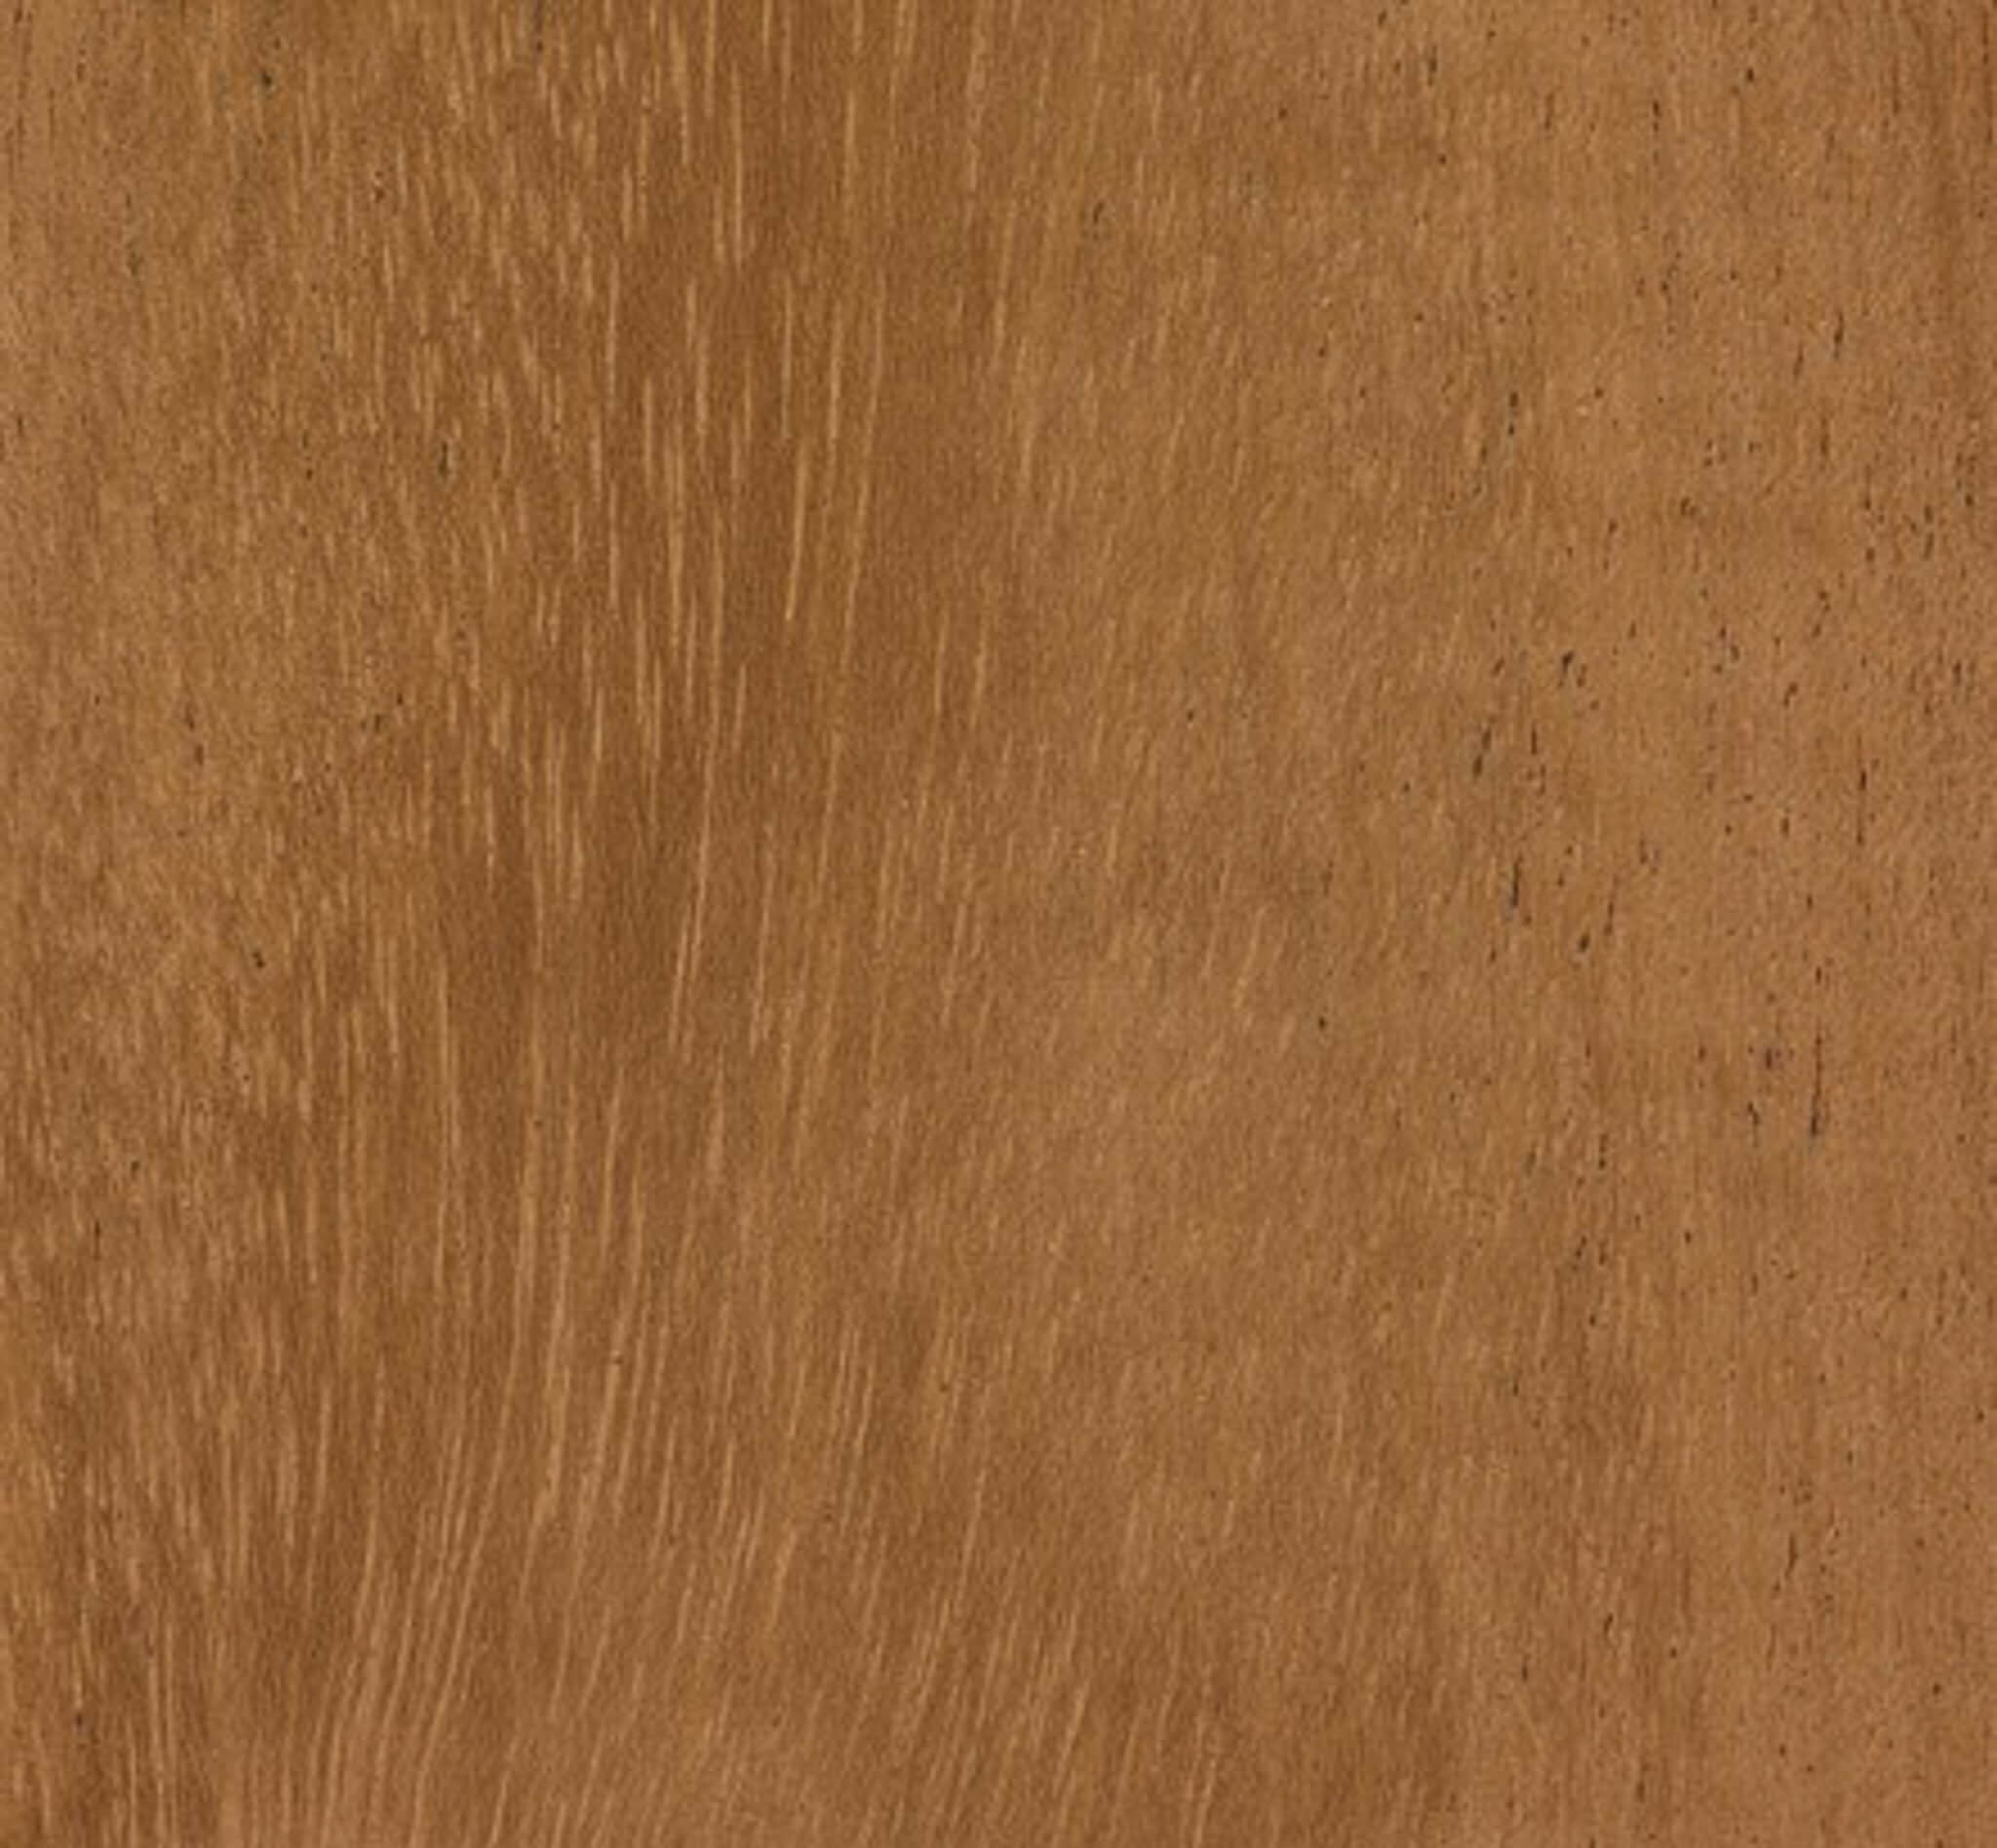 a sample of african mahogany wood